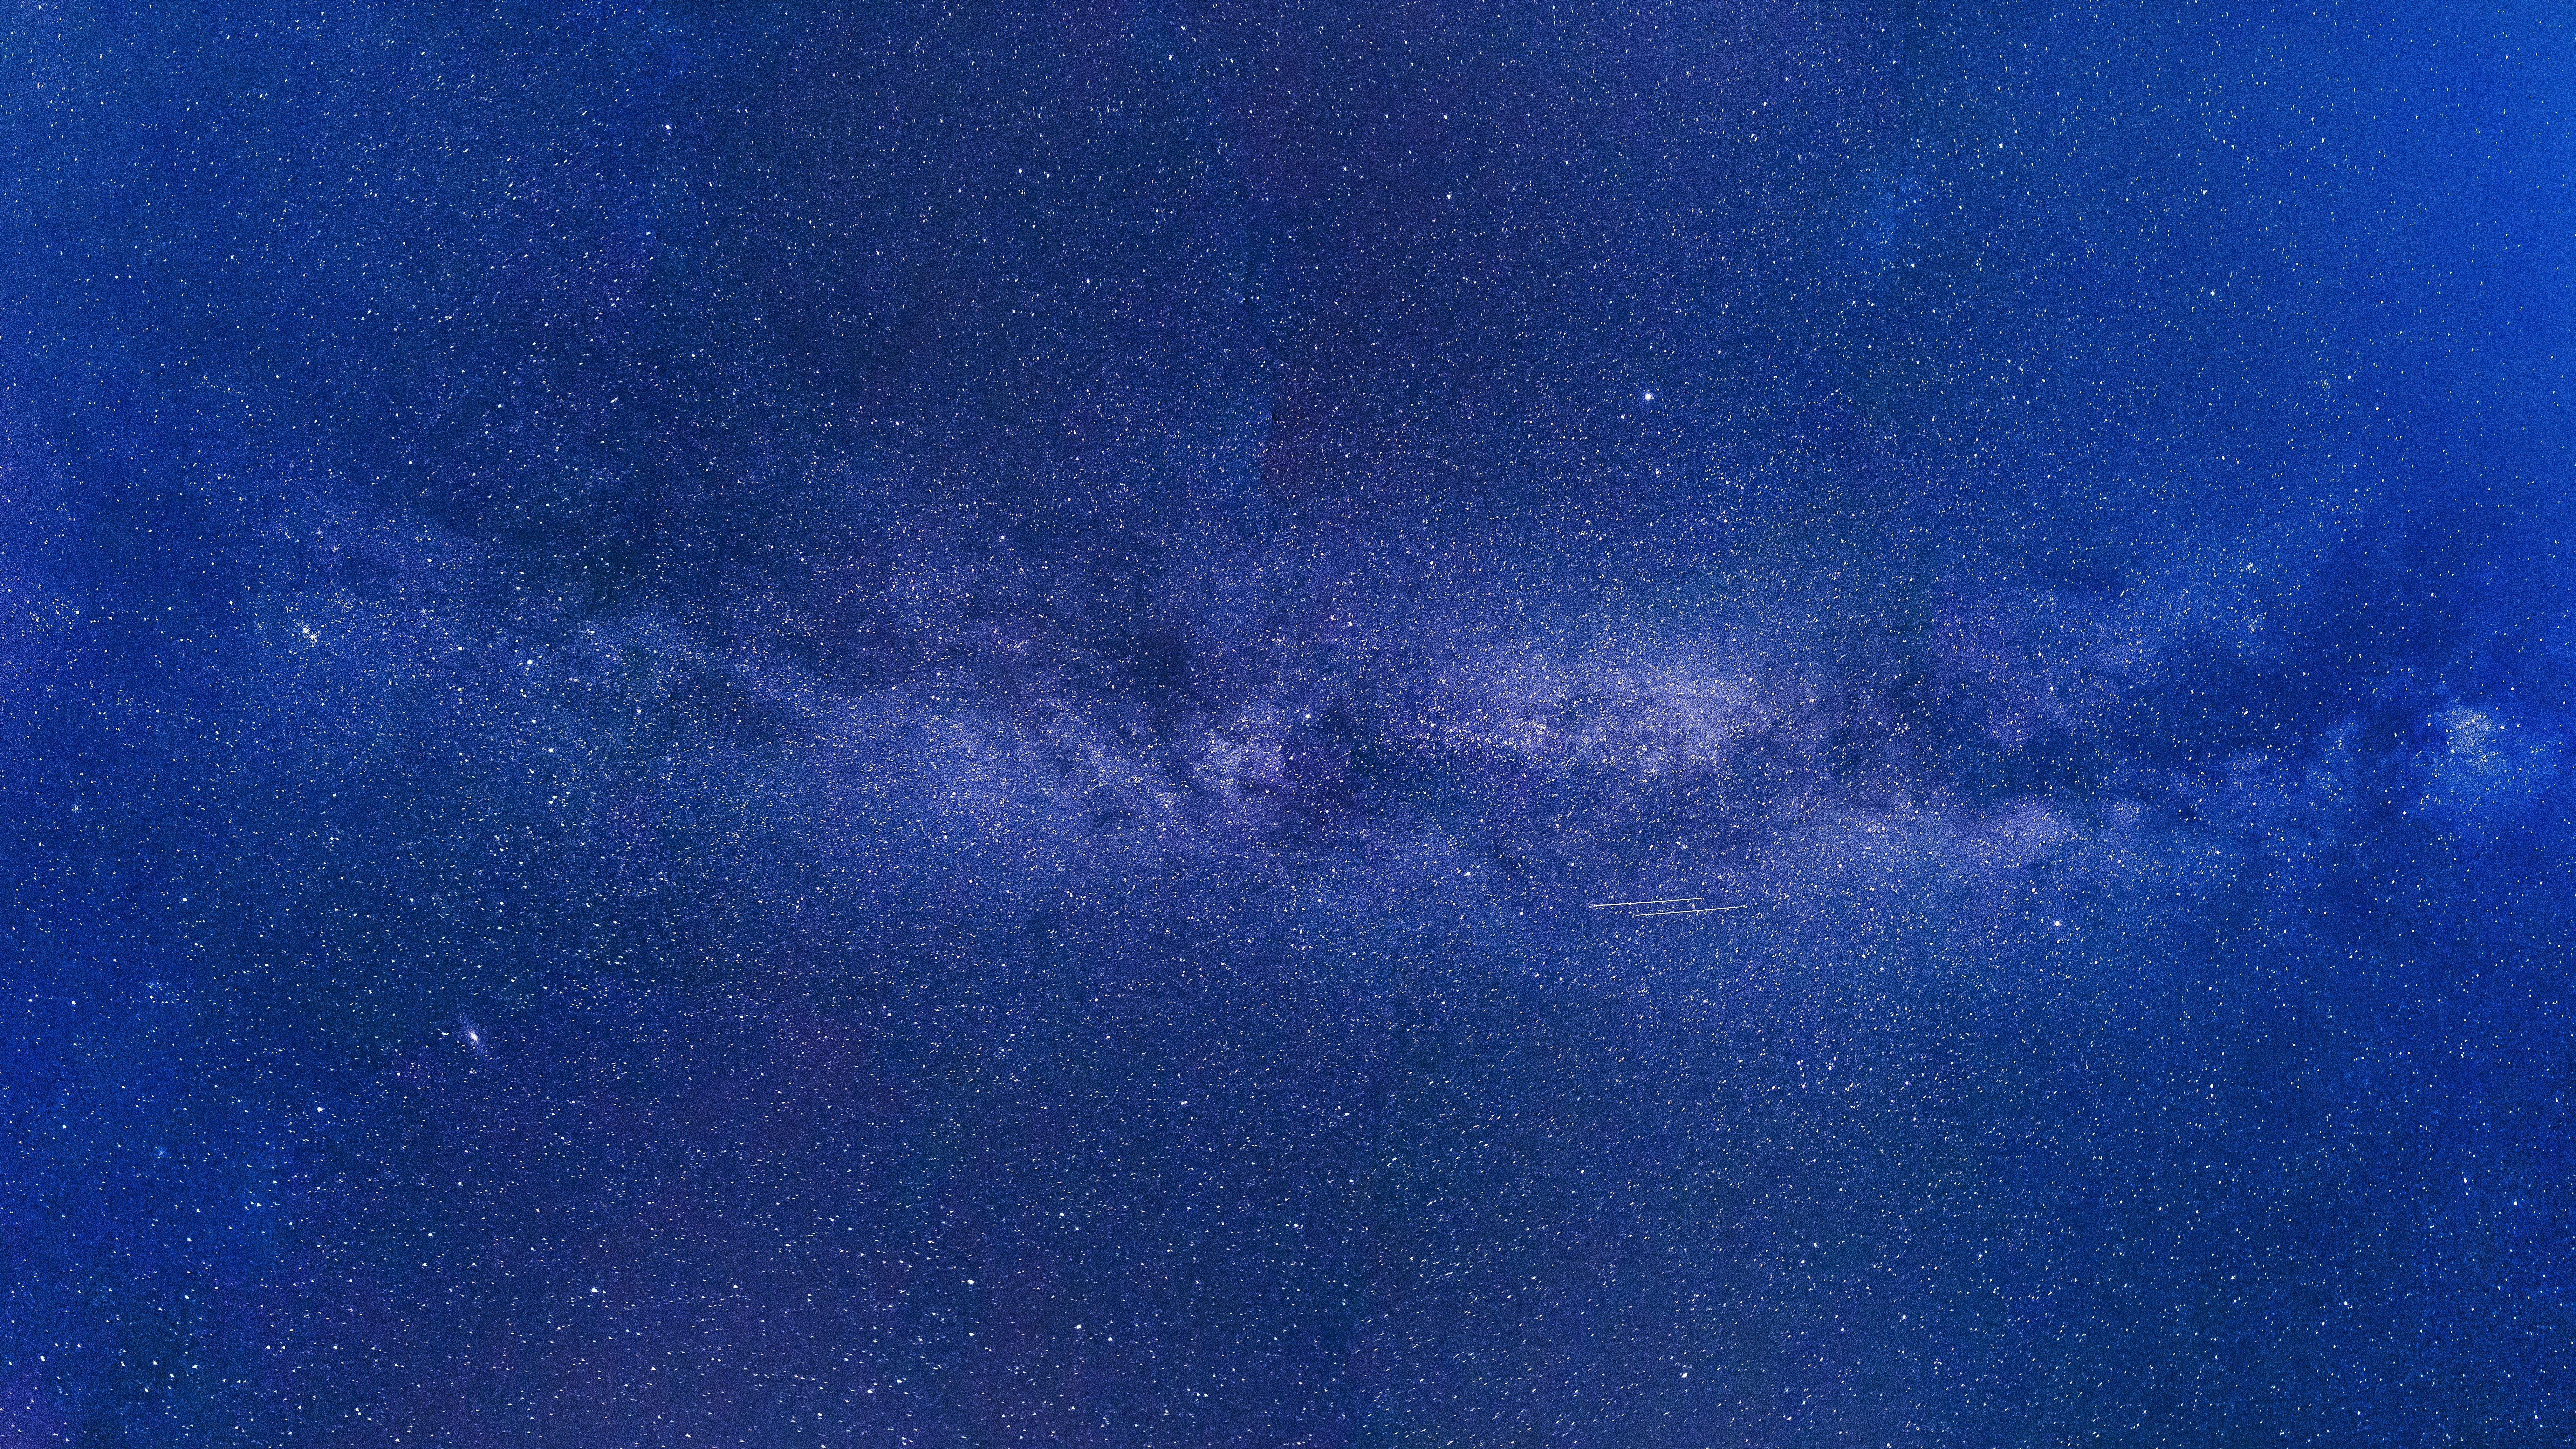 Galaxy 8k, HD Digital Universe, 4k Wallpaper, Image, Background